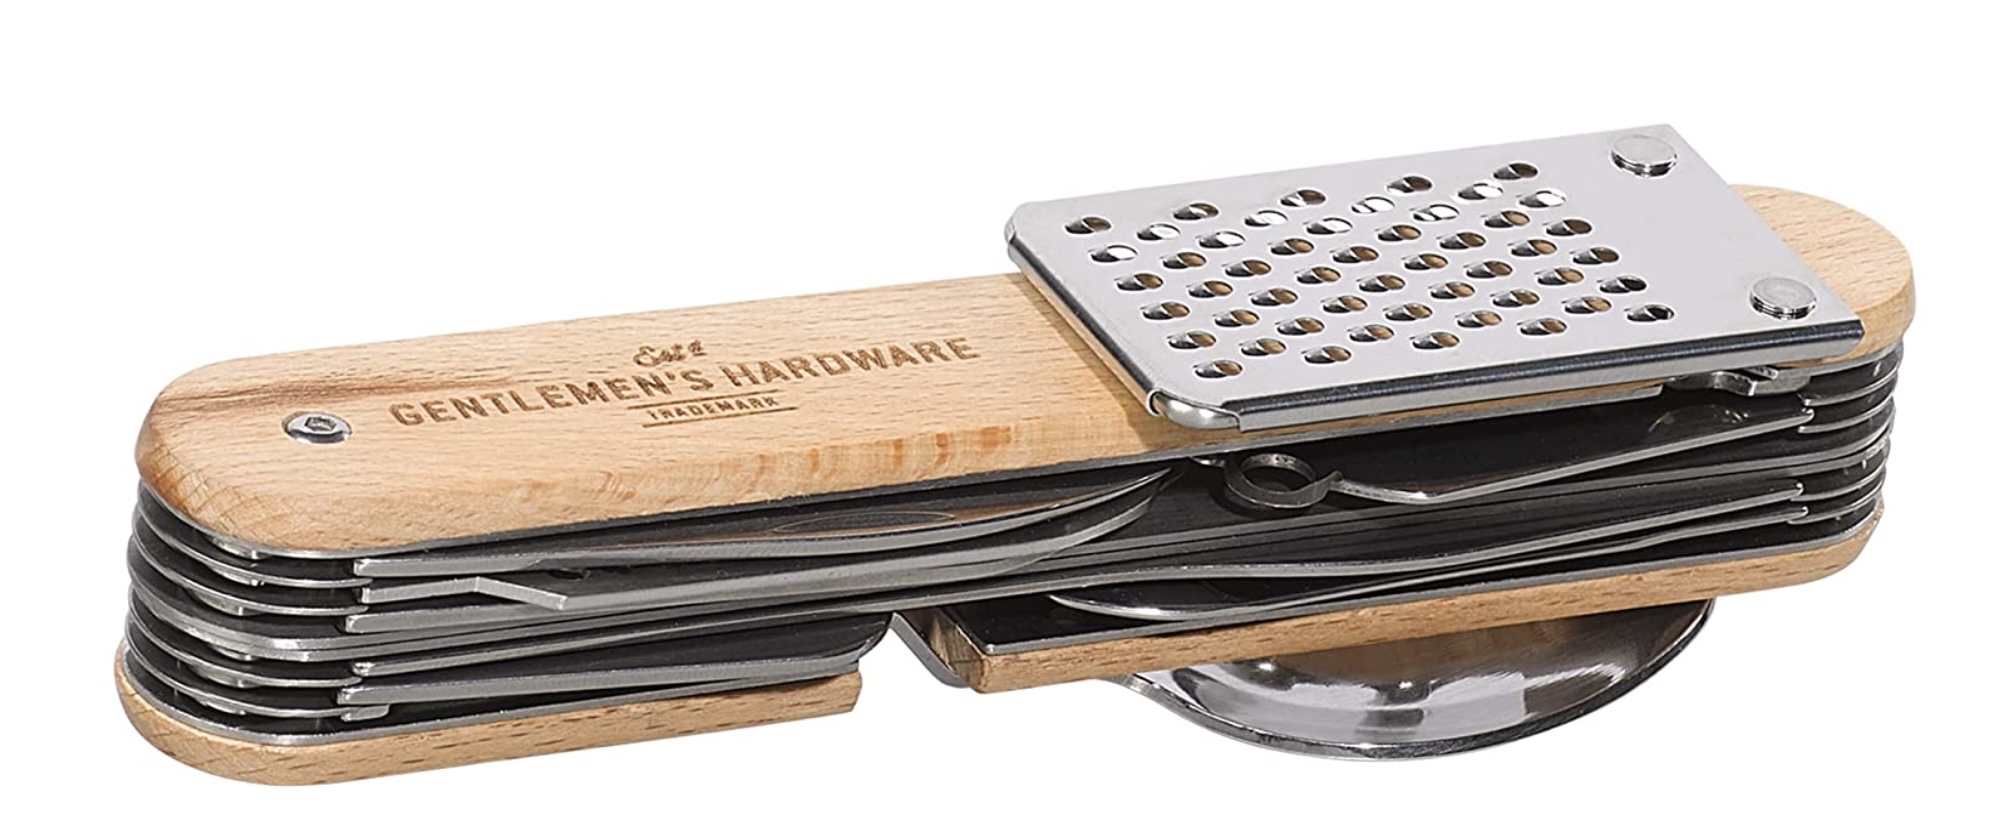 Gentlemen's Hardware 12-in-1 Detachable Kitchen Stainless Steel Multi Tool  with Wood Handles